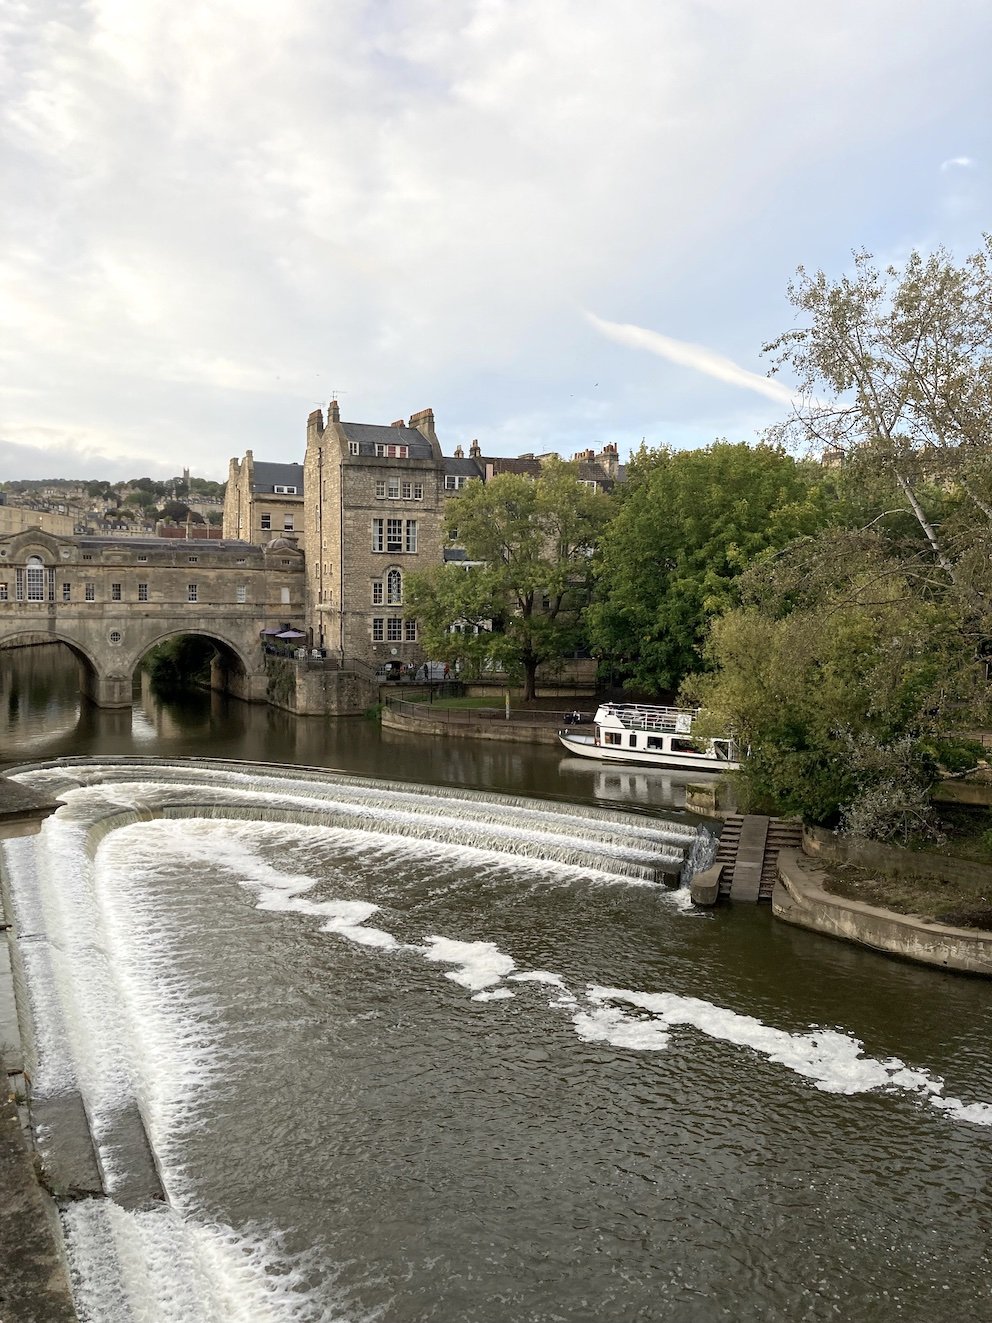 River life in Bath